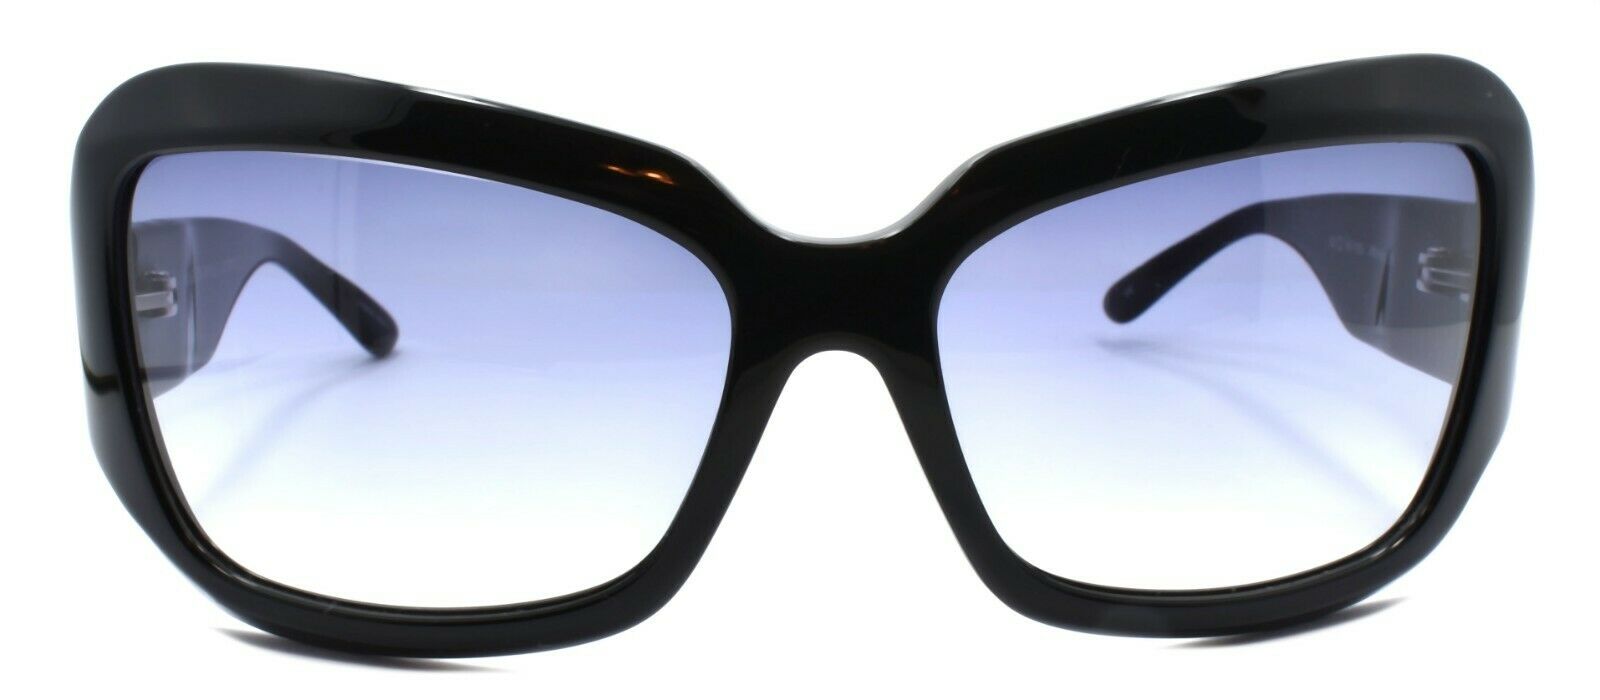 2-Oliver Peoples Athena BK Women's Sunglasses Black / Blue Gradient 115 mm JAPAN-Does not apply-IKSpecs